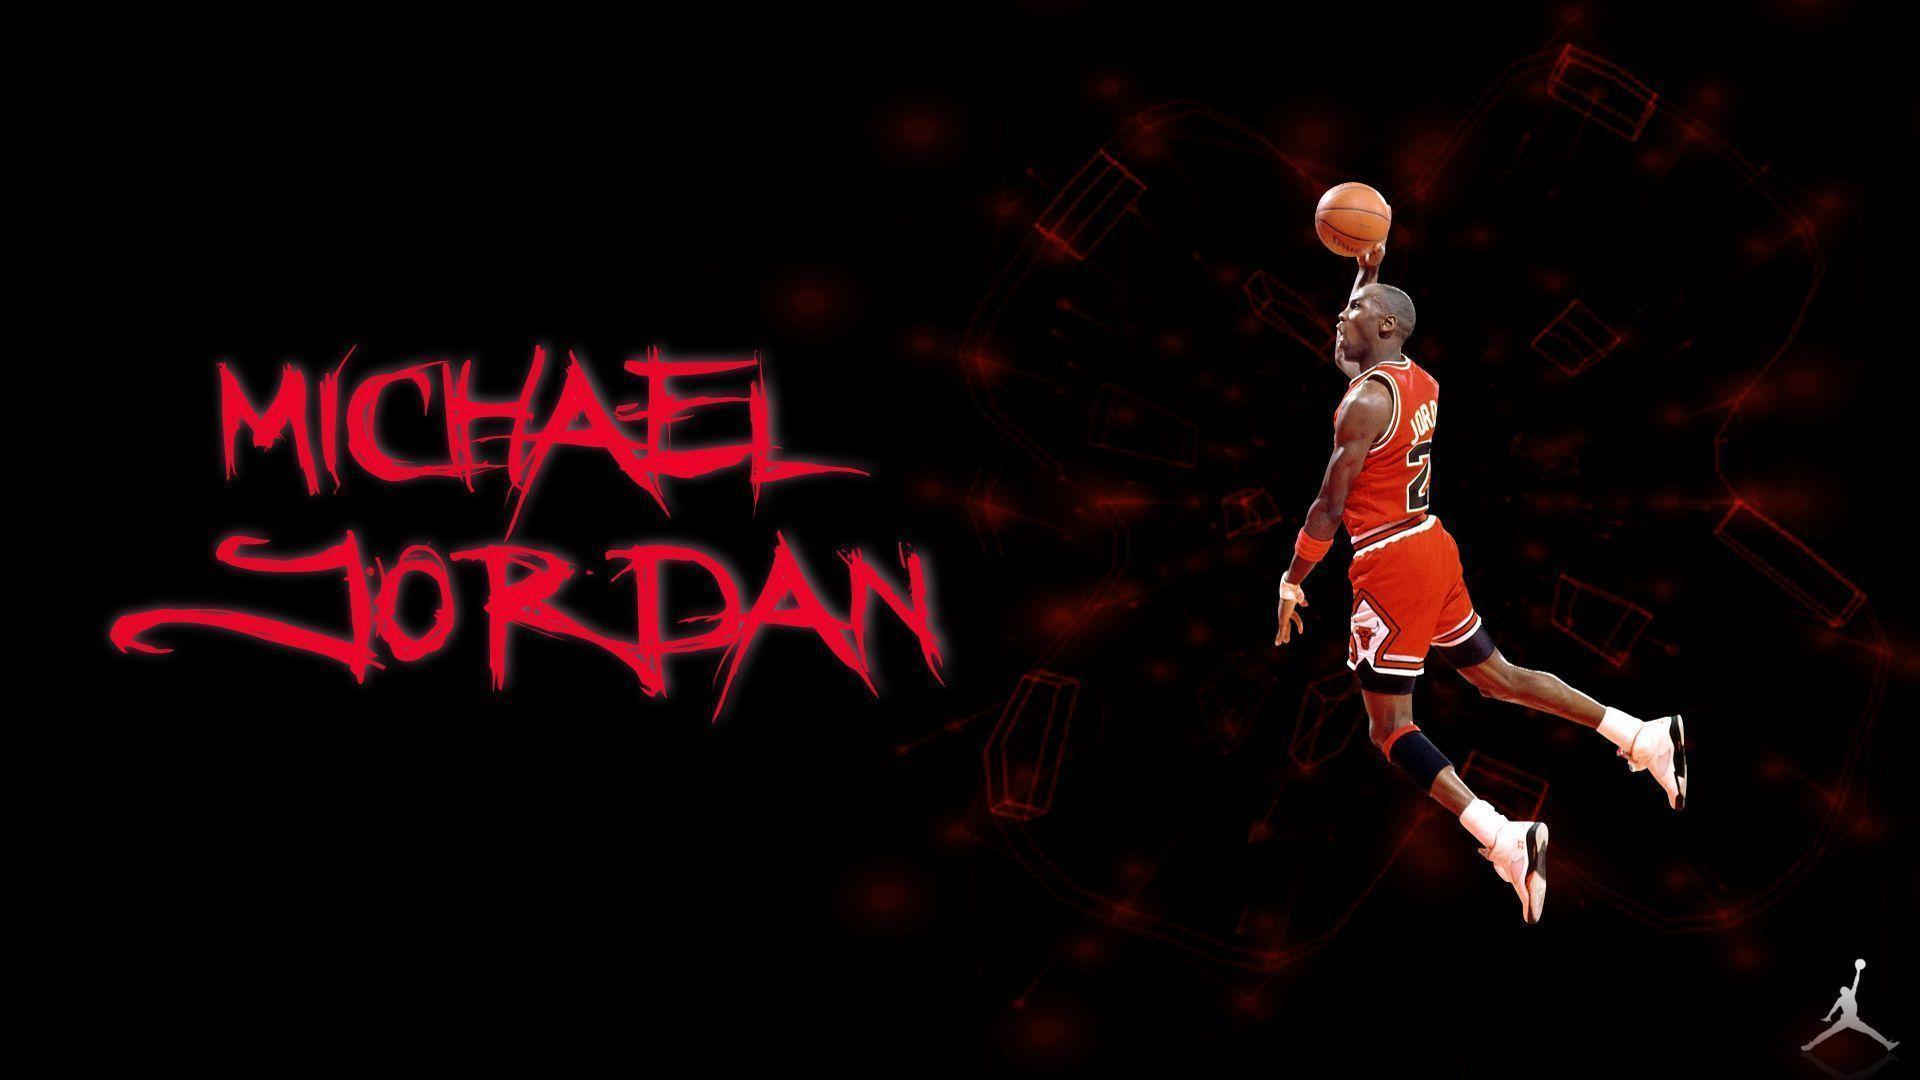 Michael Jordan Logo 57 117074 Image HD Wallpaper. Wallfoy.com